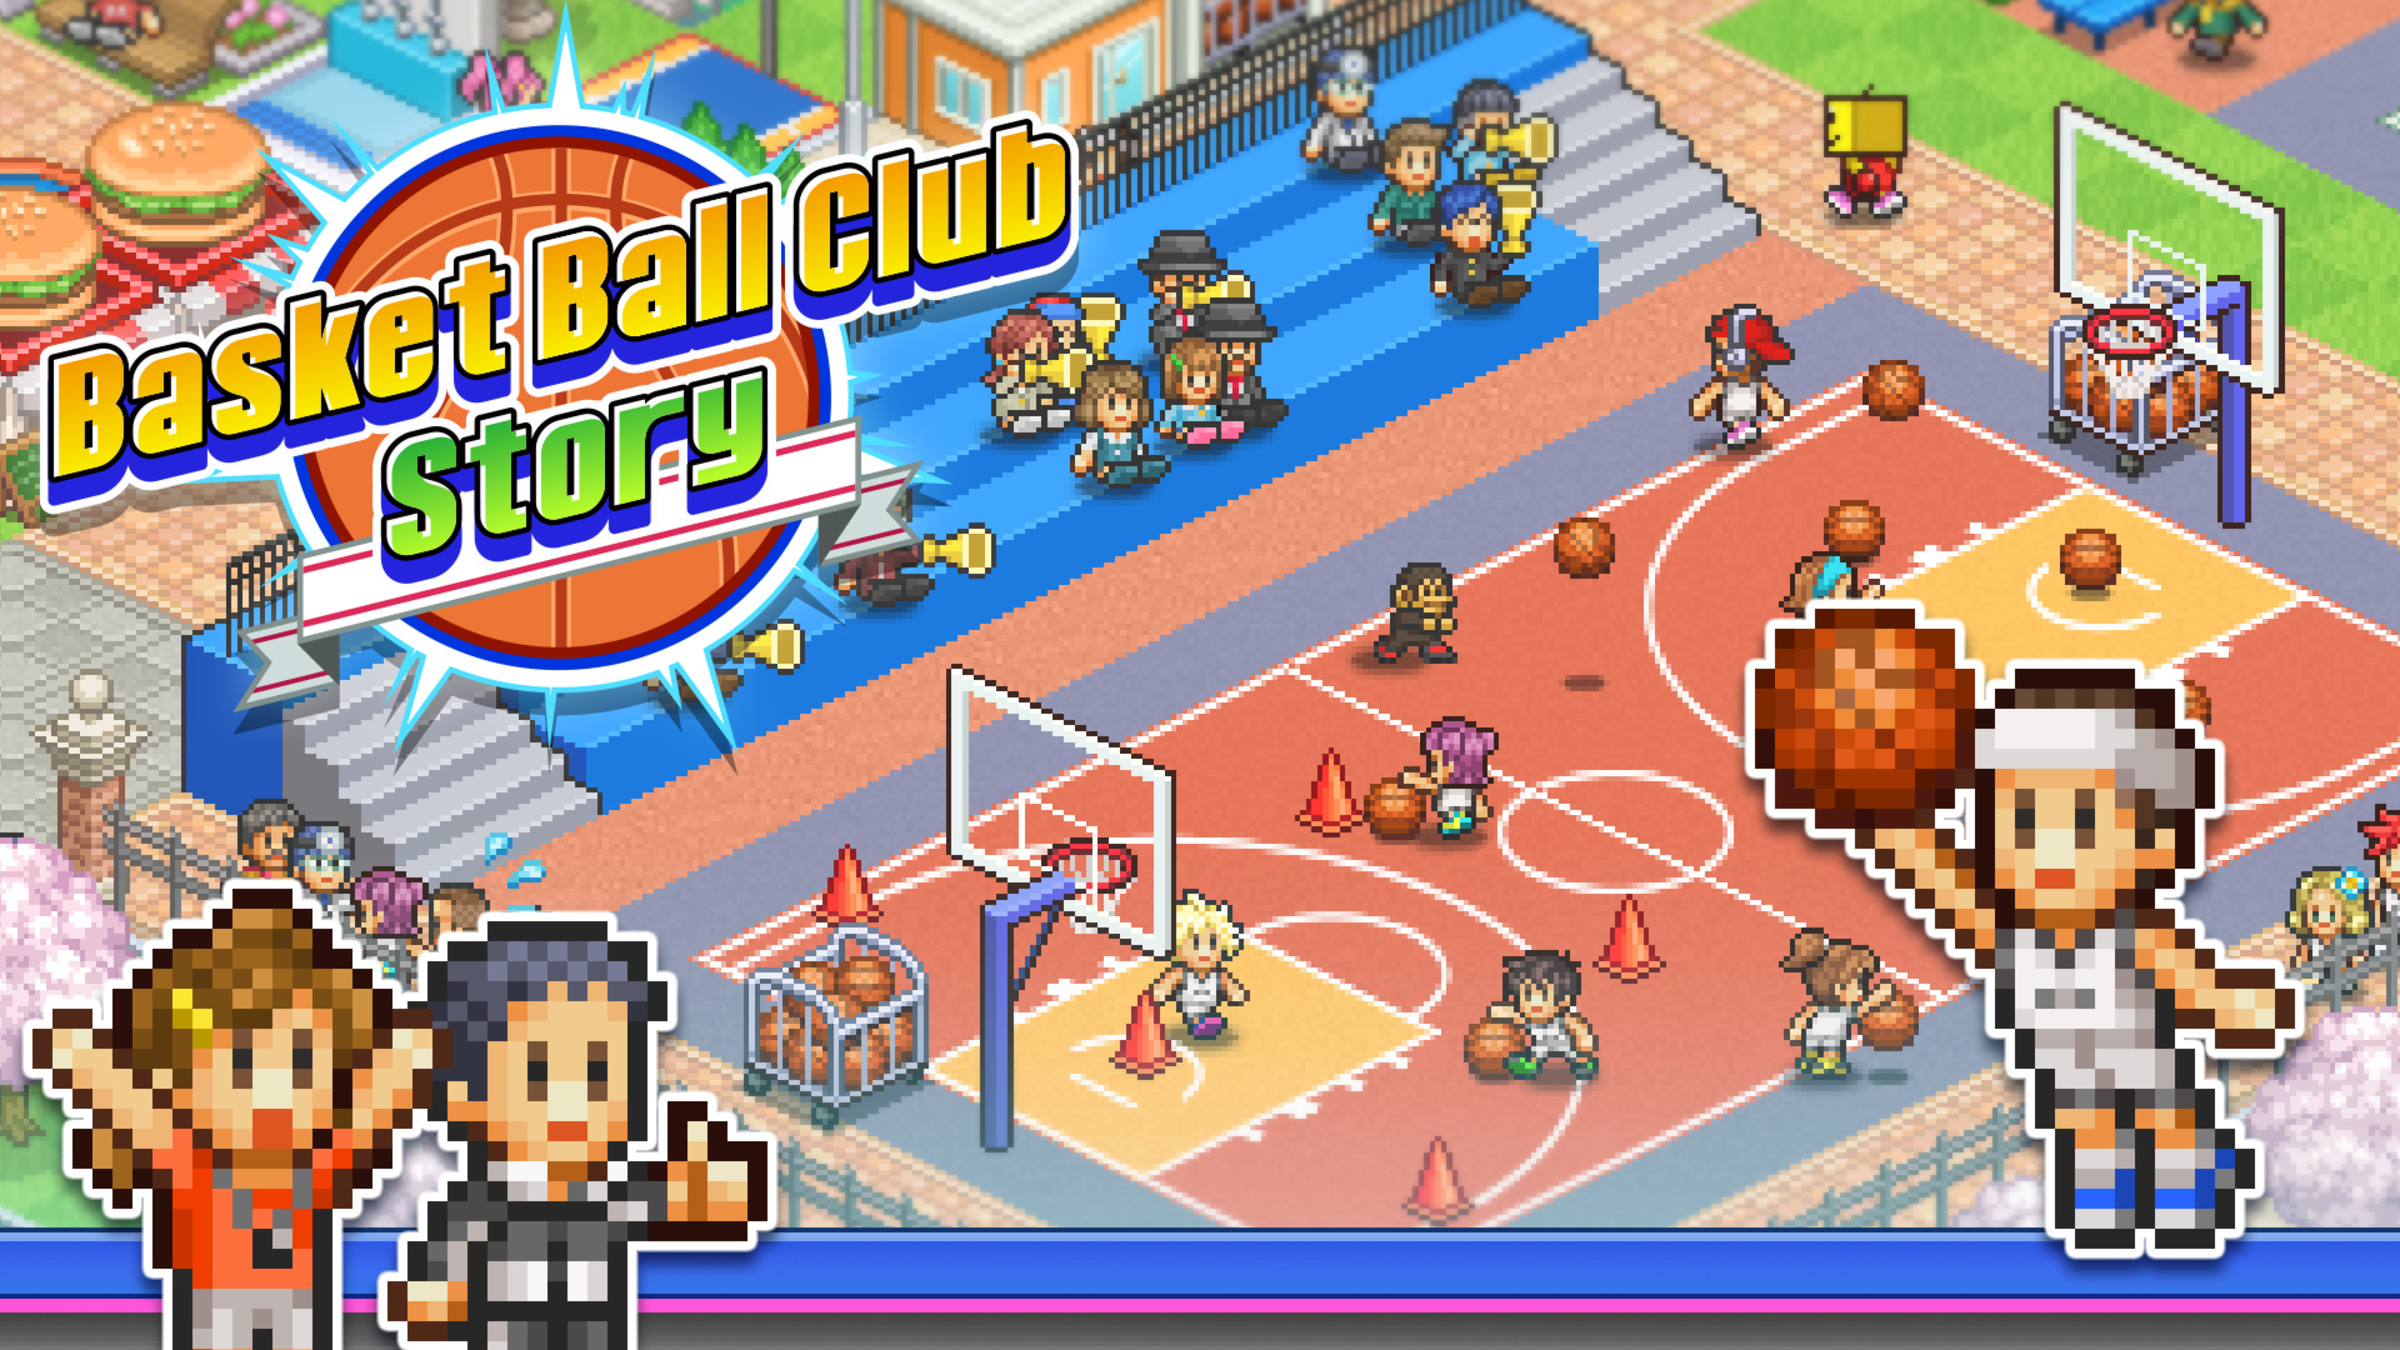 Basketball Club Story for Nintendo Switch - Nintendo Official Site